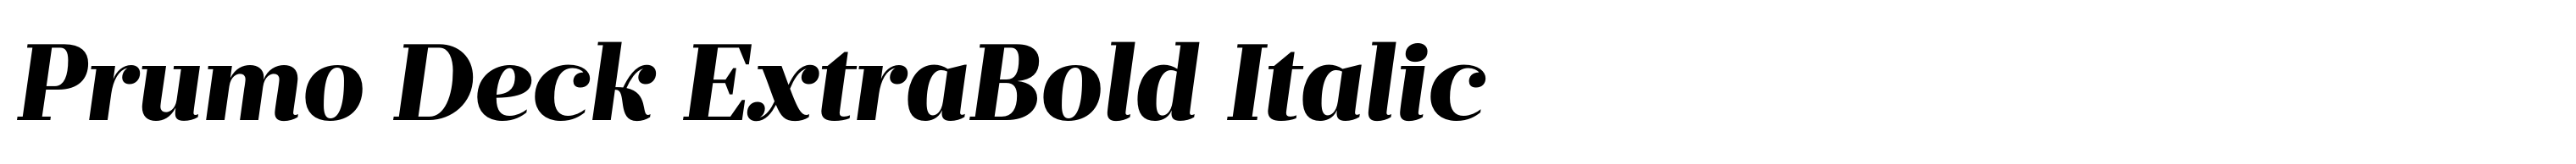 Prumo Deck ExtraBold Italic